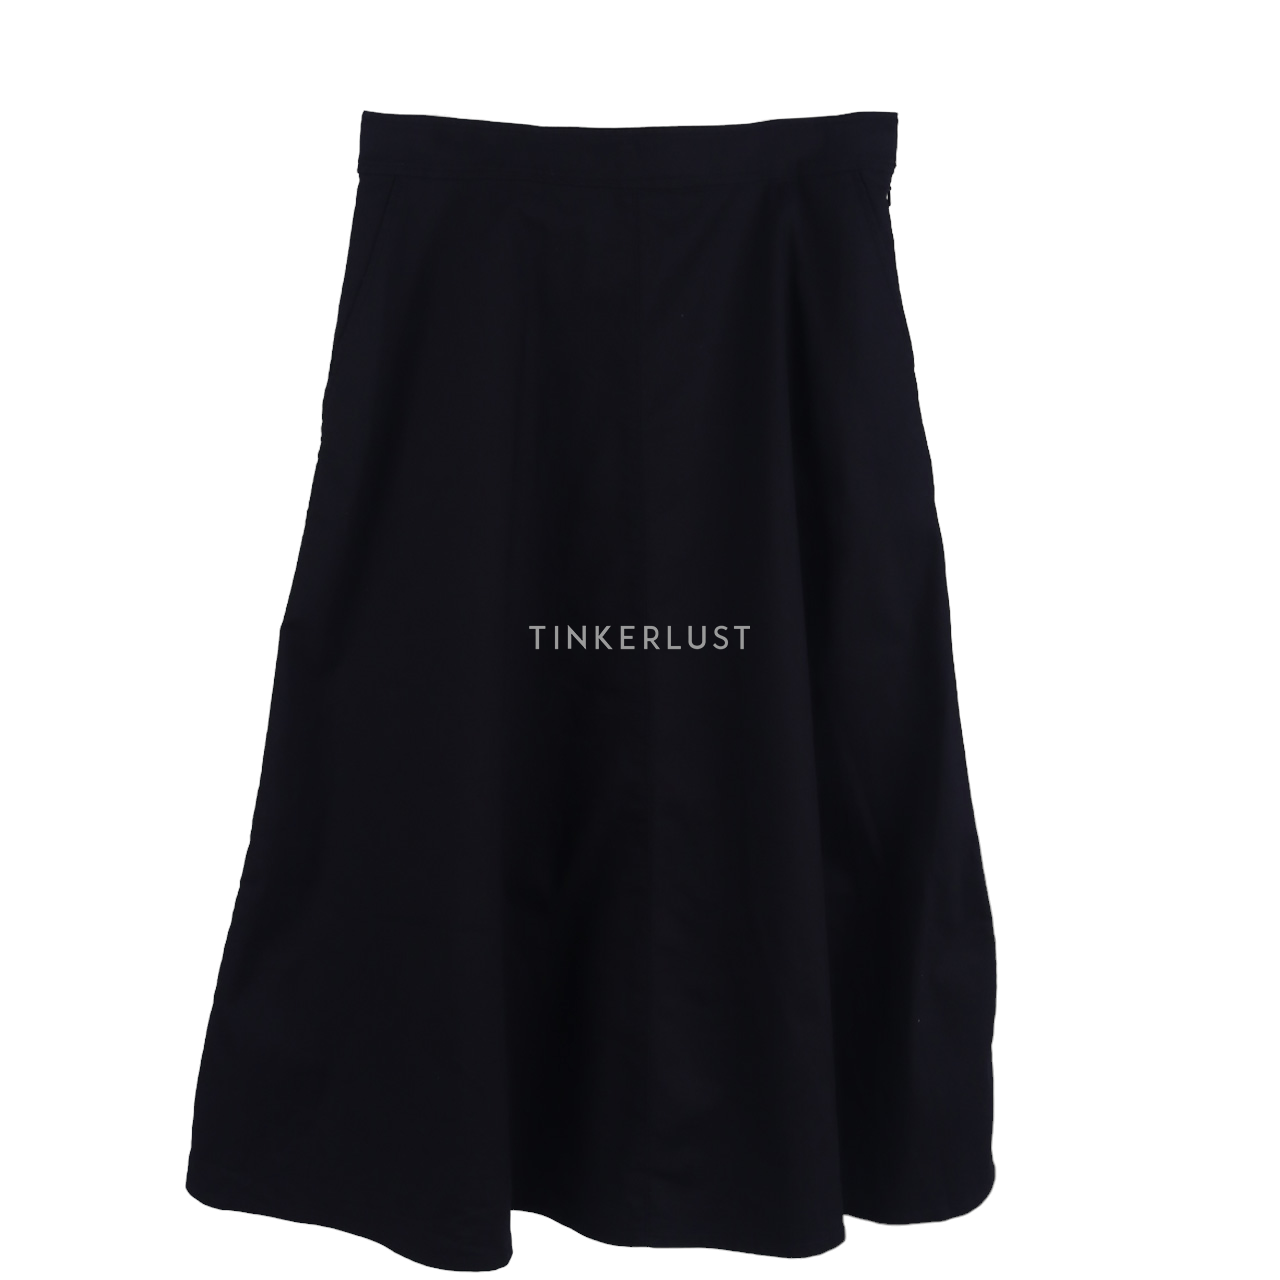 UNIQLO Black Maxi Skirt